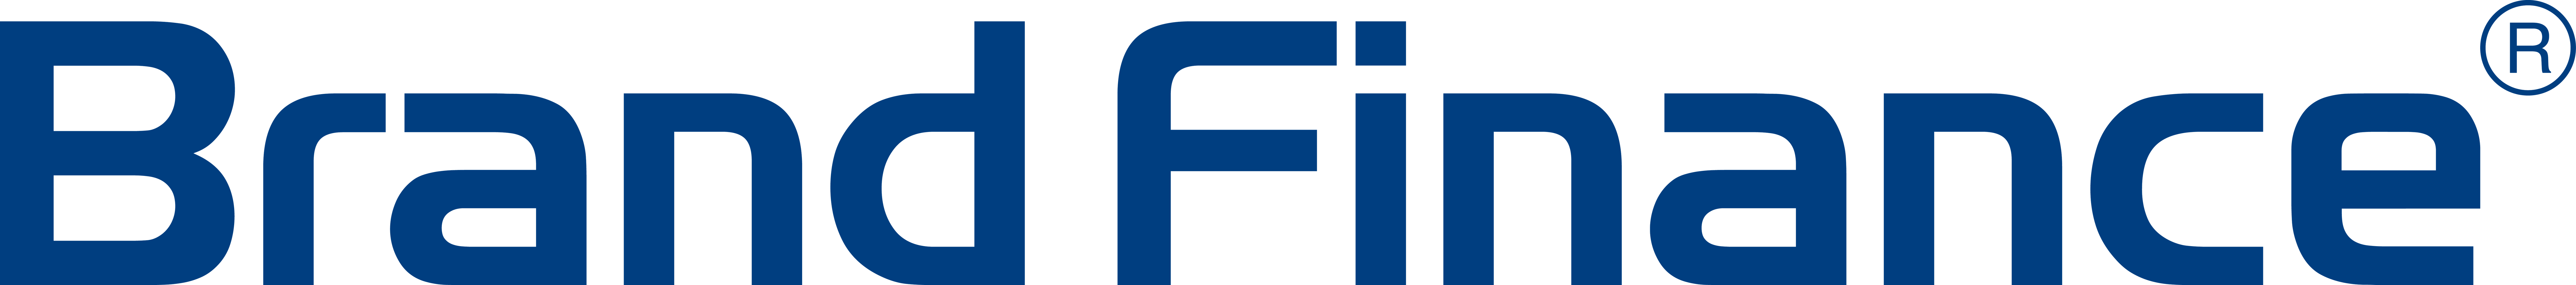 Most Popular Finance Company Logo LogoDix